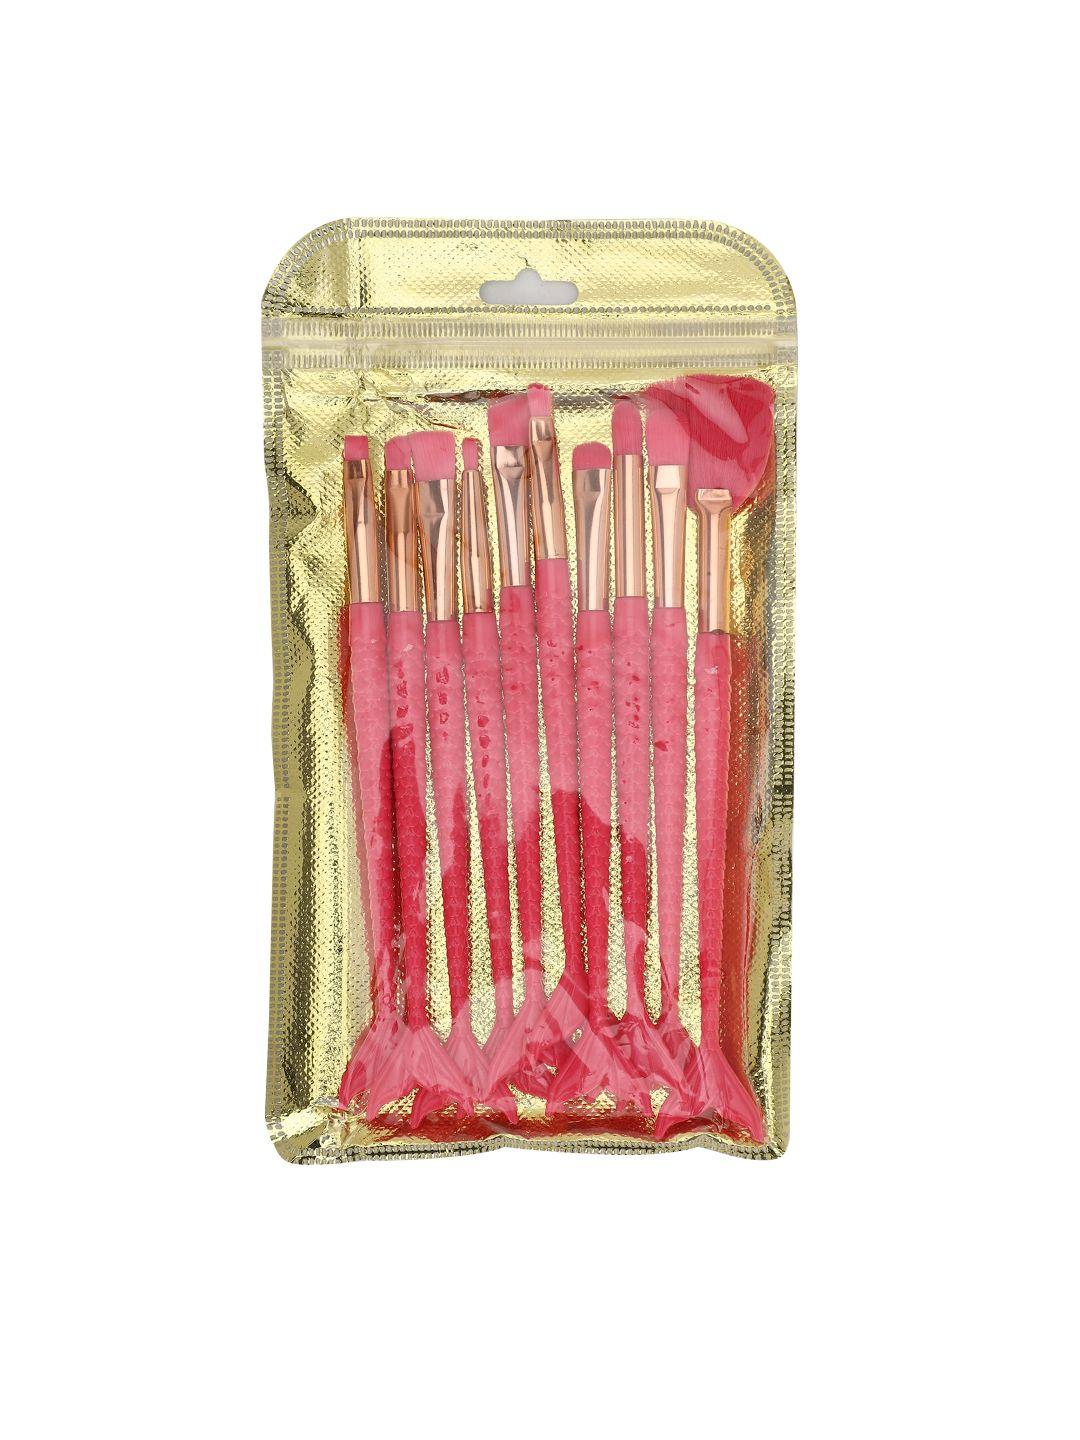 forever 21 pink set of 10 make up brush